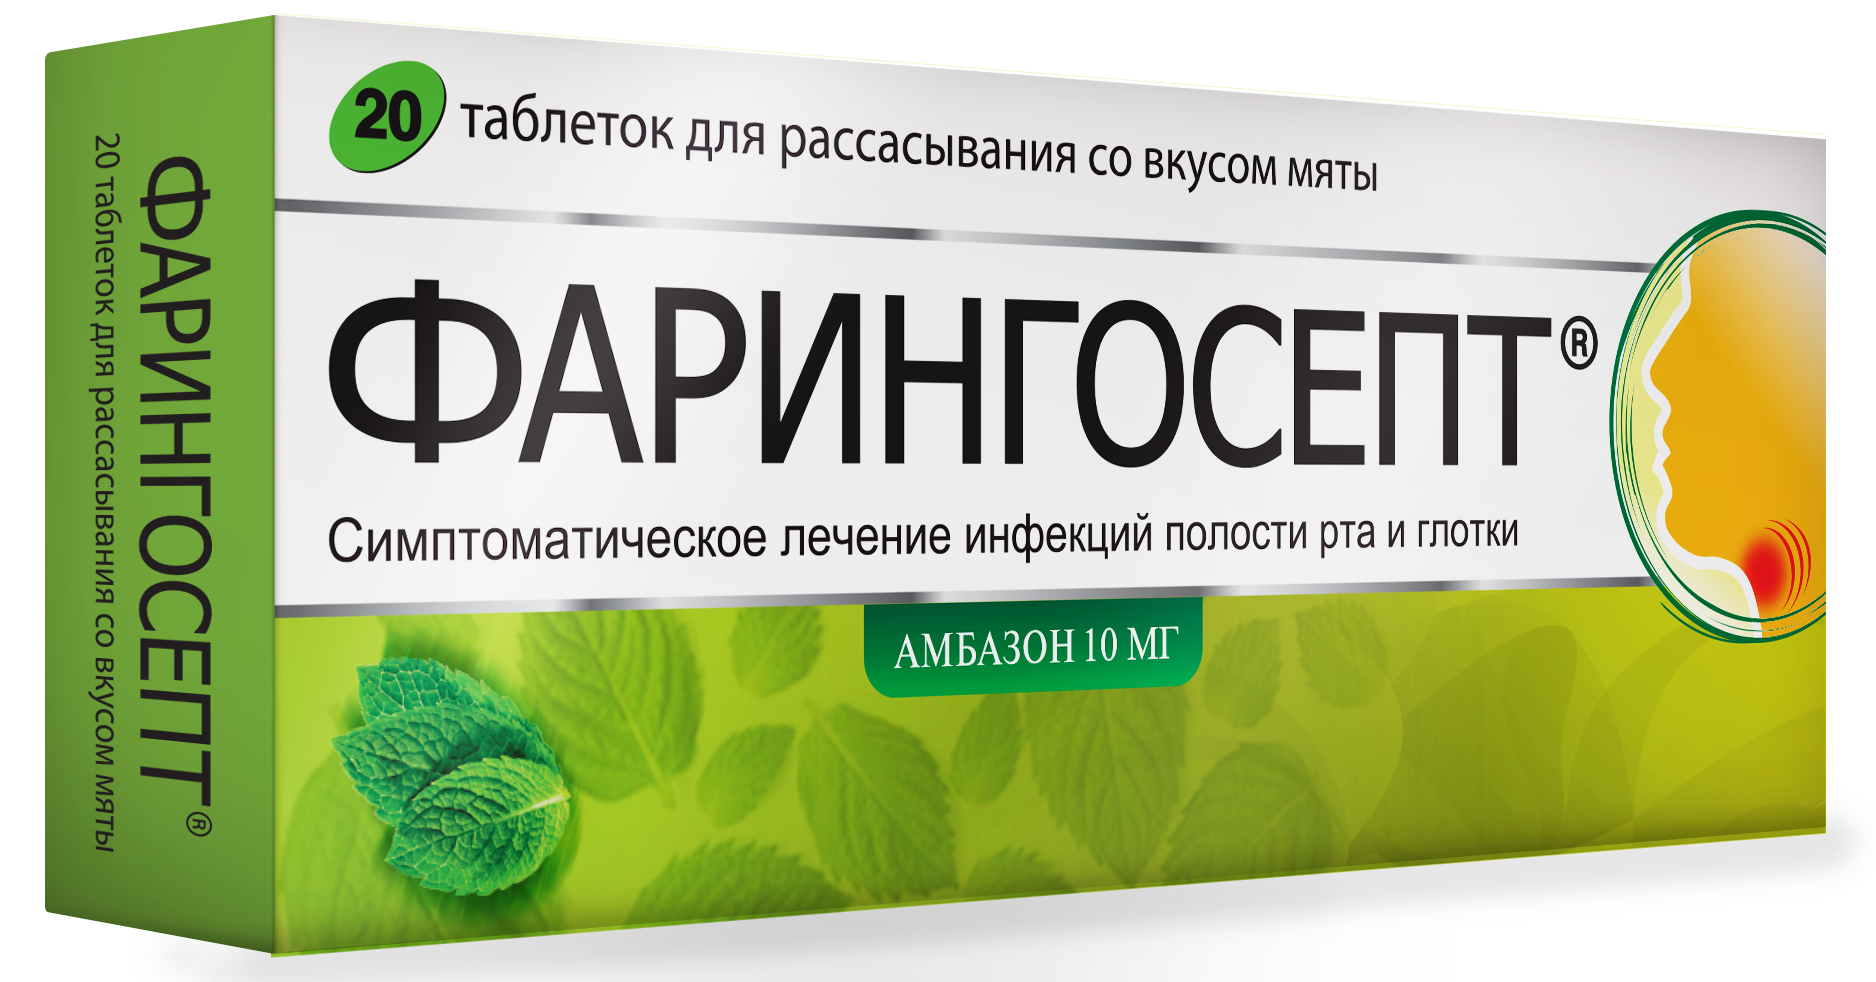 Фарингосепт, таблетки для рассасывания (мята) 10 мг, 20 шт. фарингосепт таб д рассас мята 20